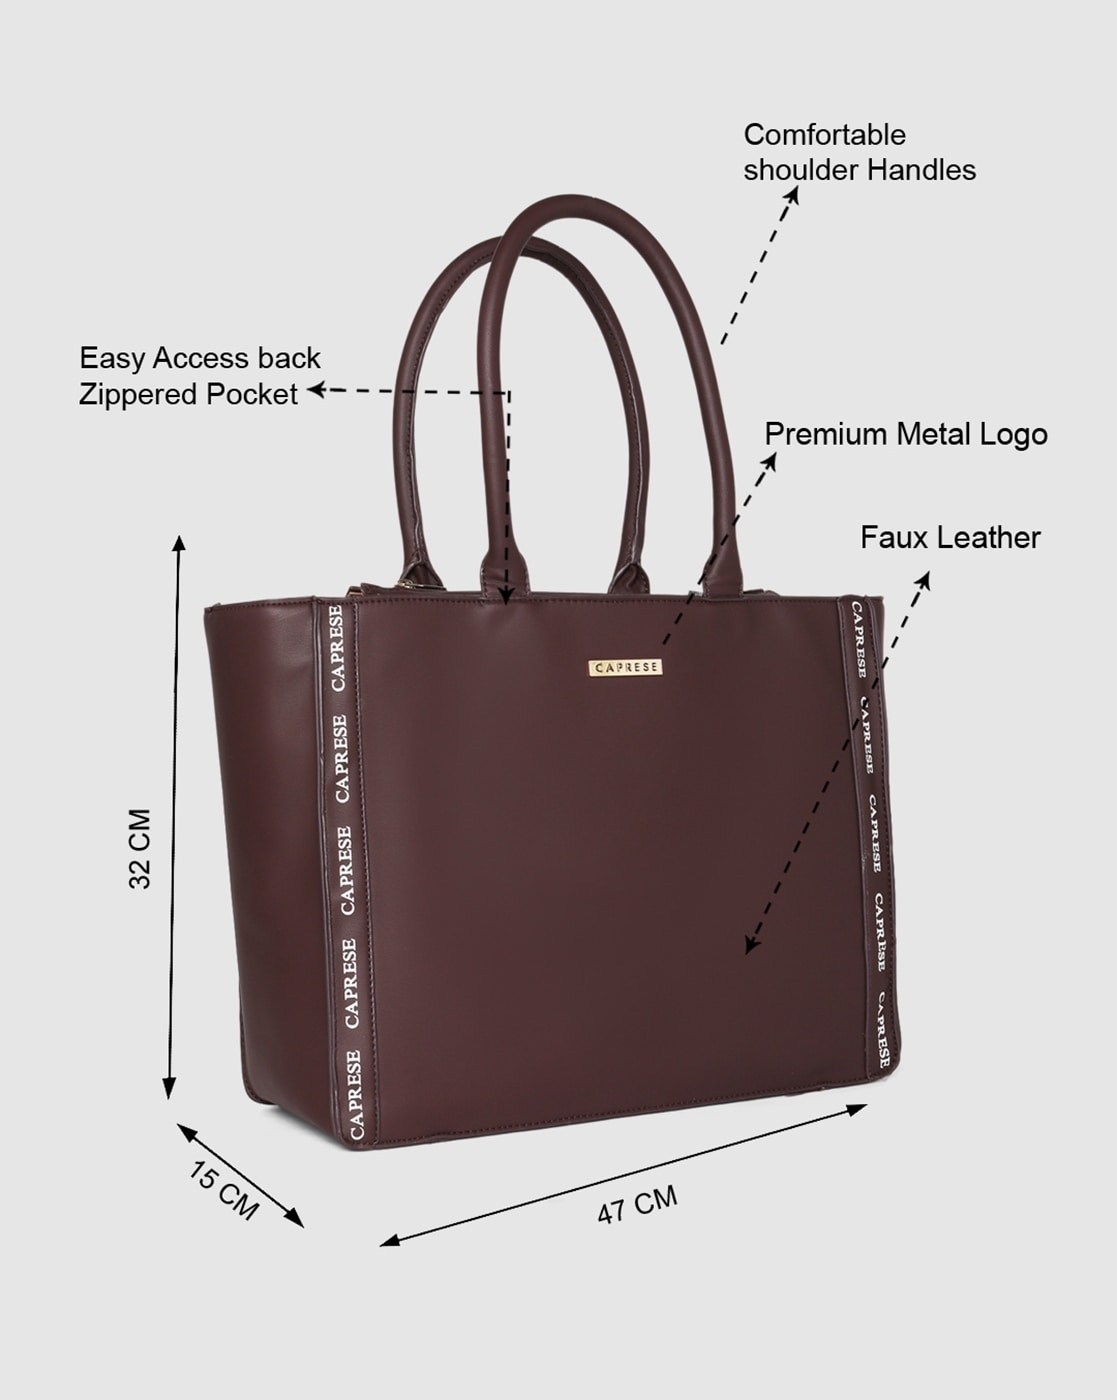 Buy Caprese Merly Women's Tote Bag (Brick) at Amazon.in